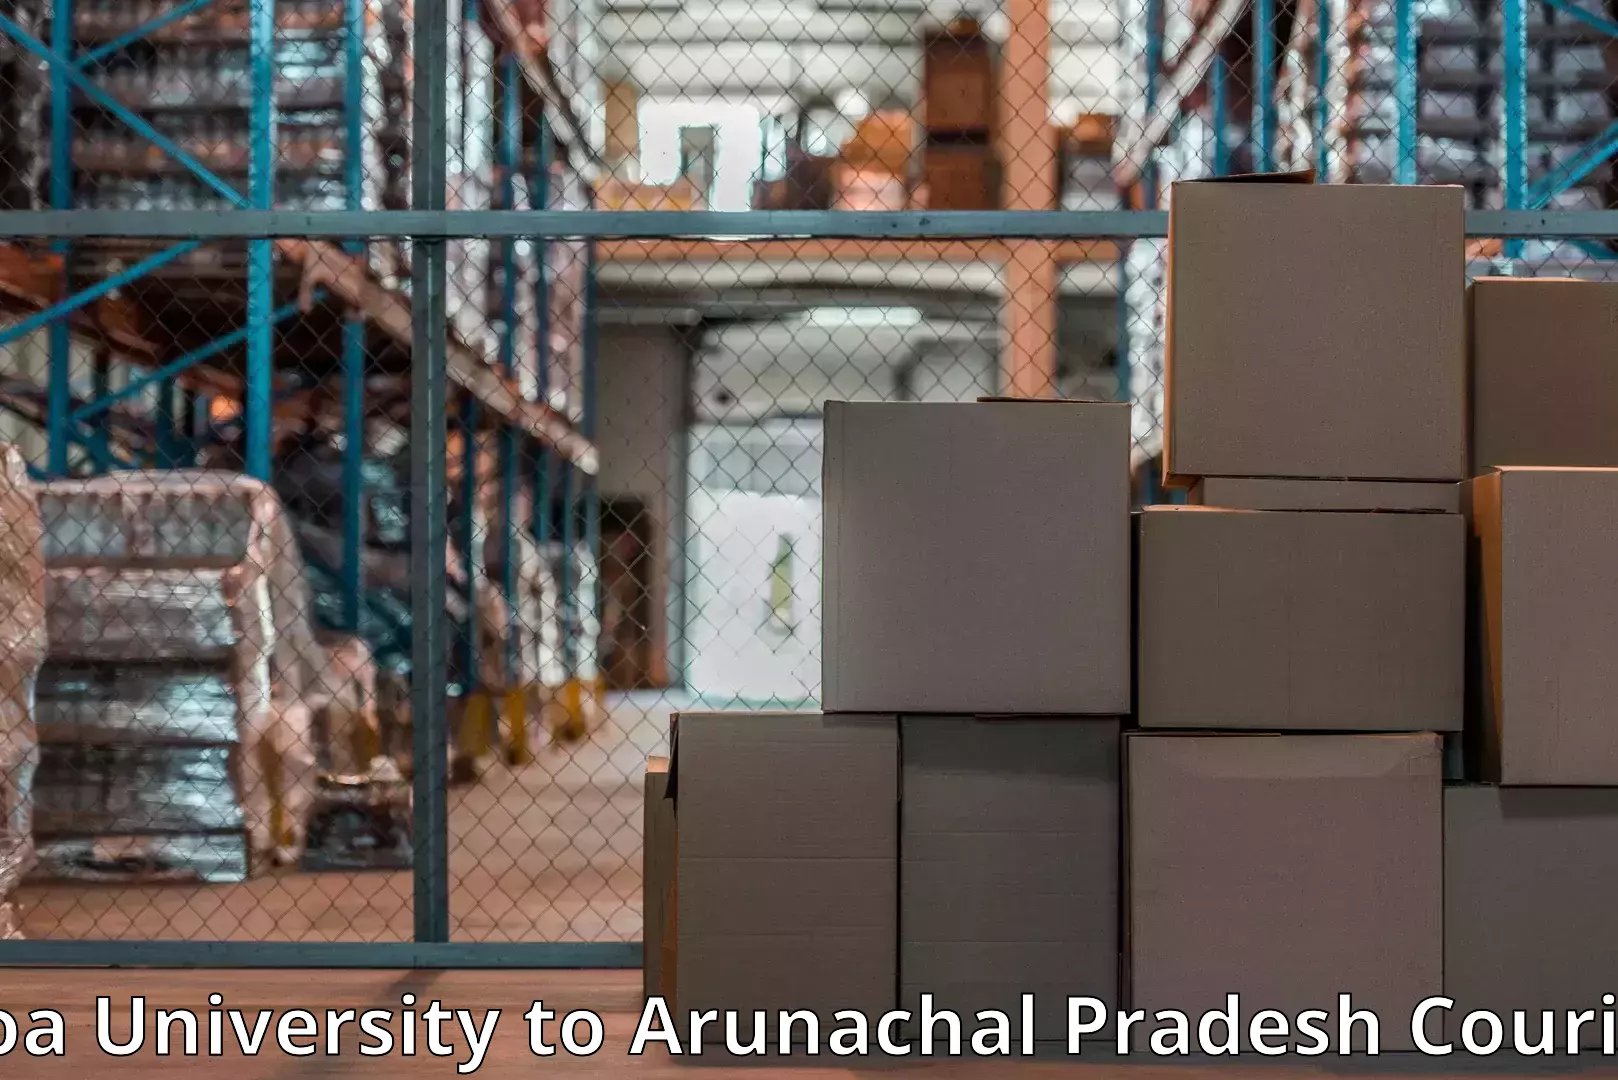 Efficient moving company Goa University to Arunachal Pradesh